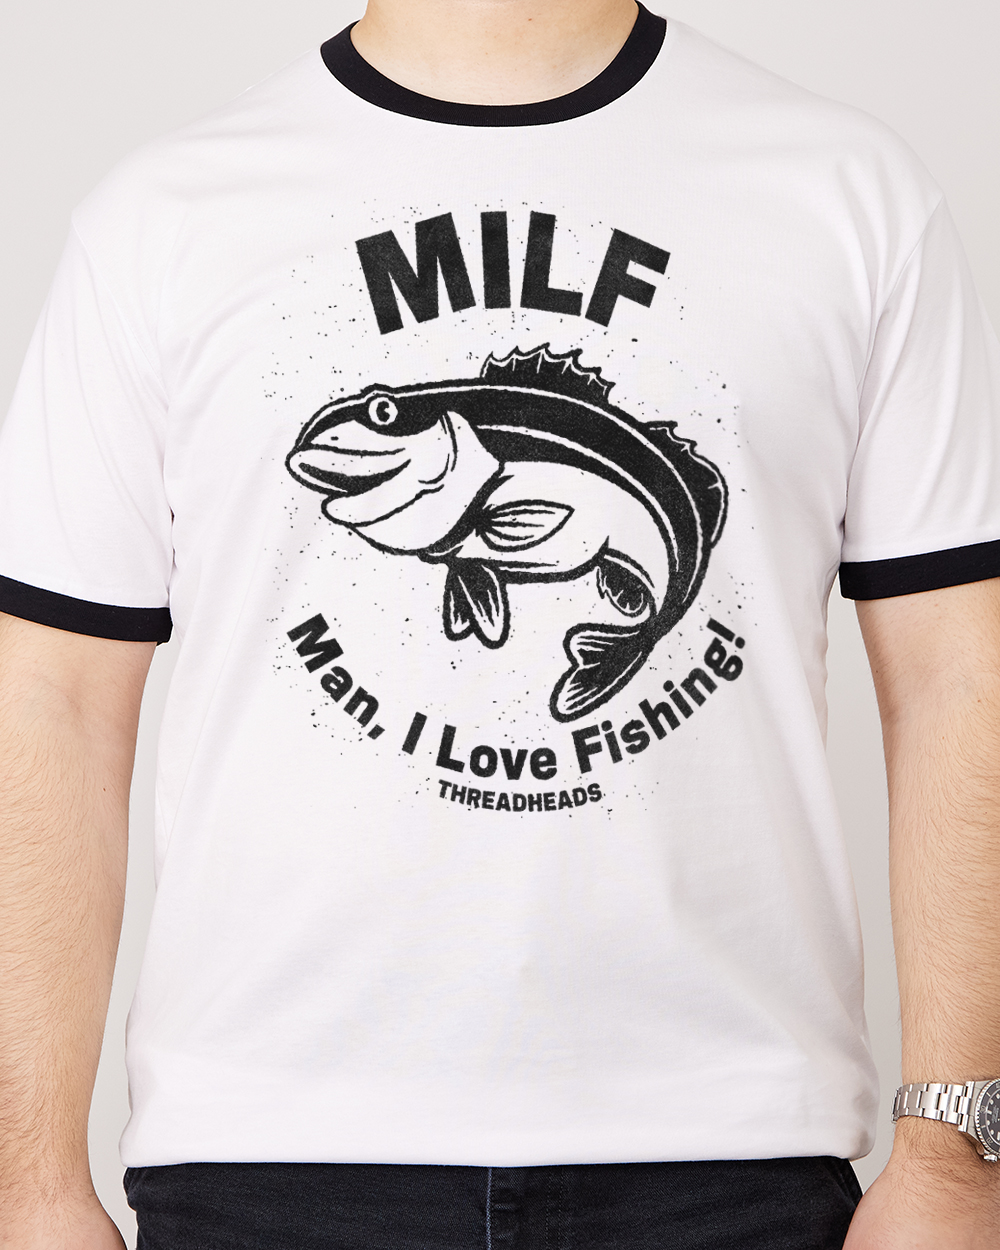 Man I Love Fishing T-Shirt